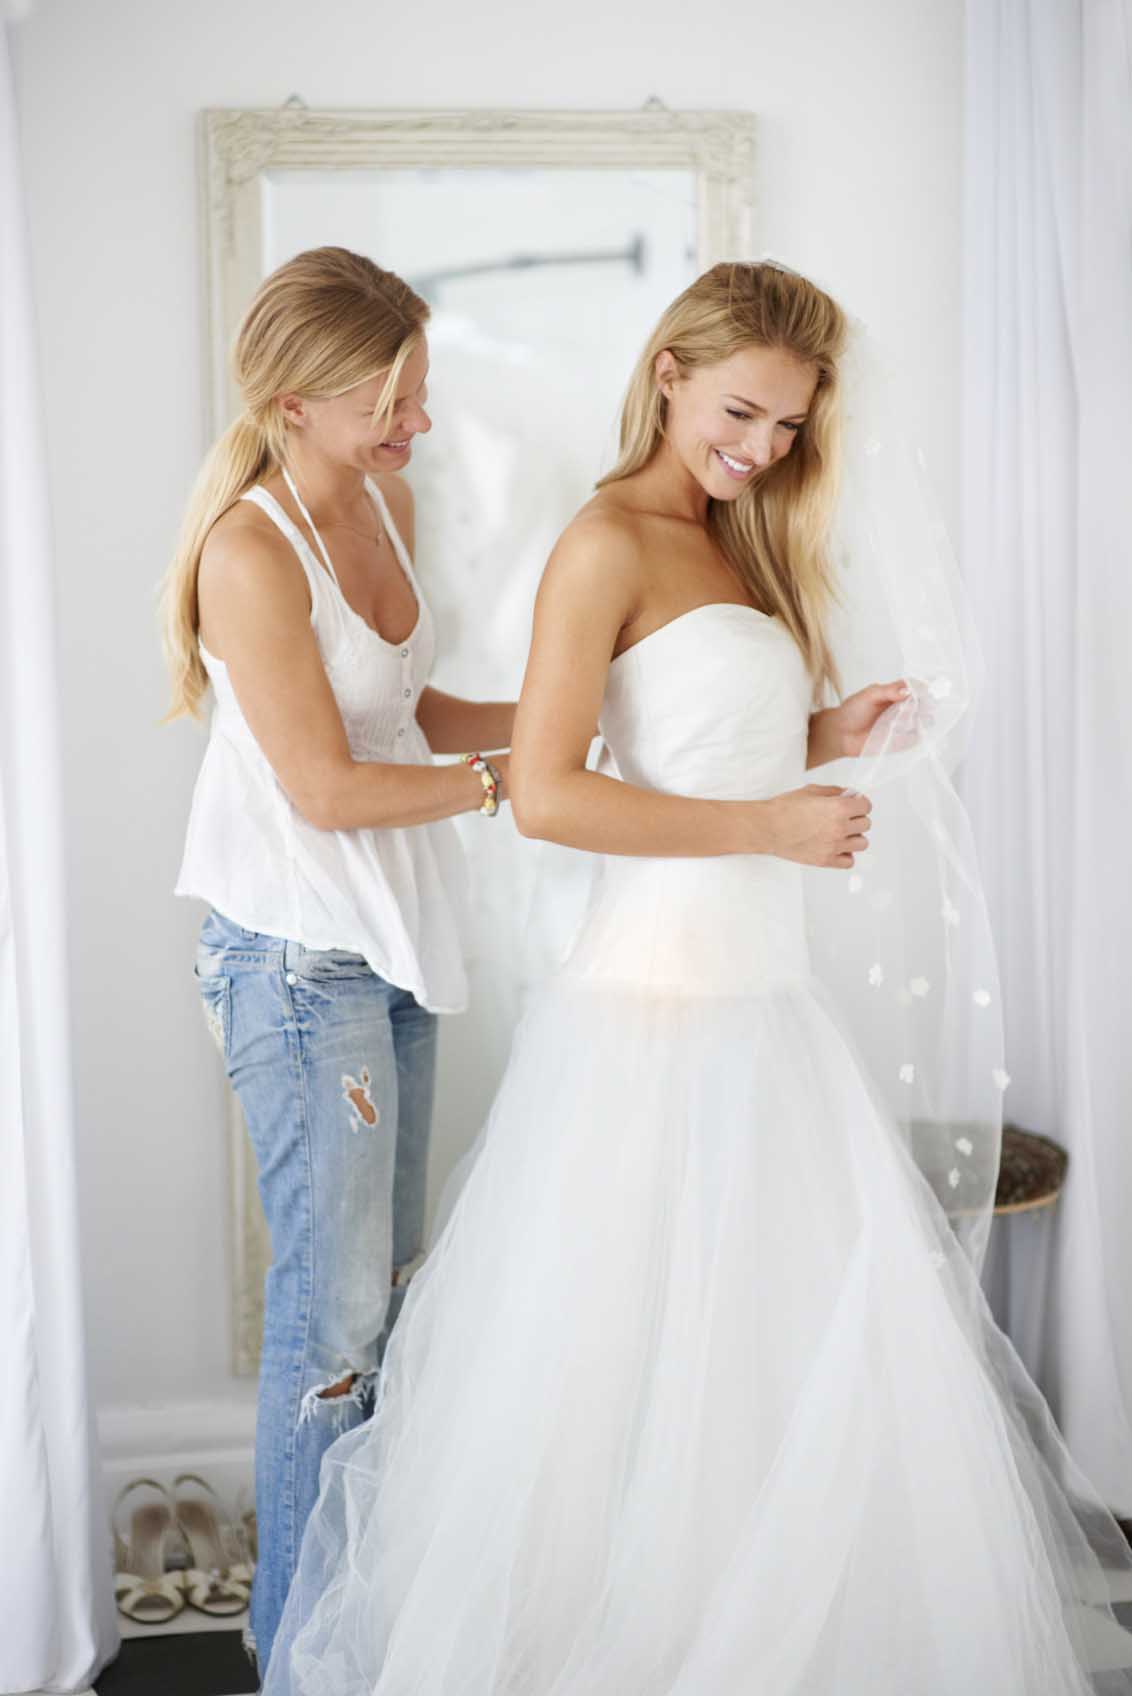 Having your wedding dress custom made 